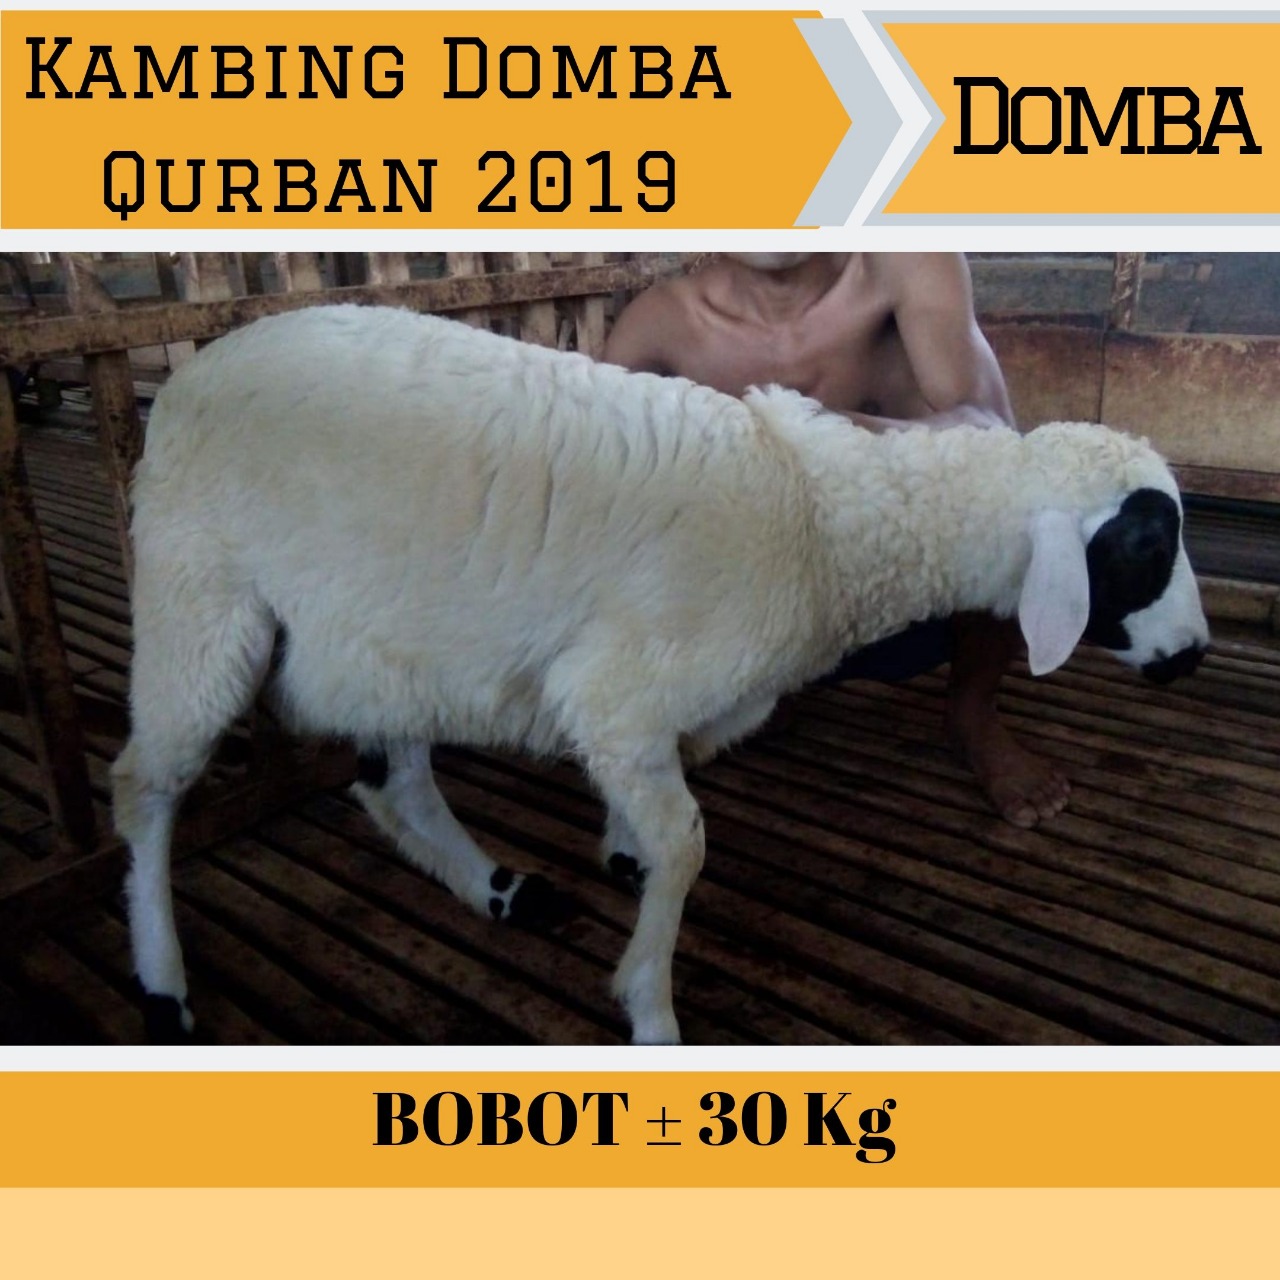 Kambing Domba Qurban Sapibagus 2019 (5)